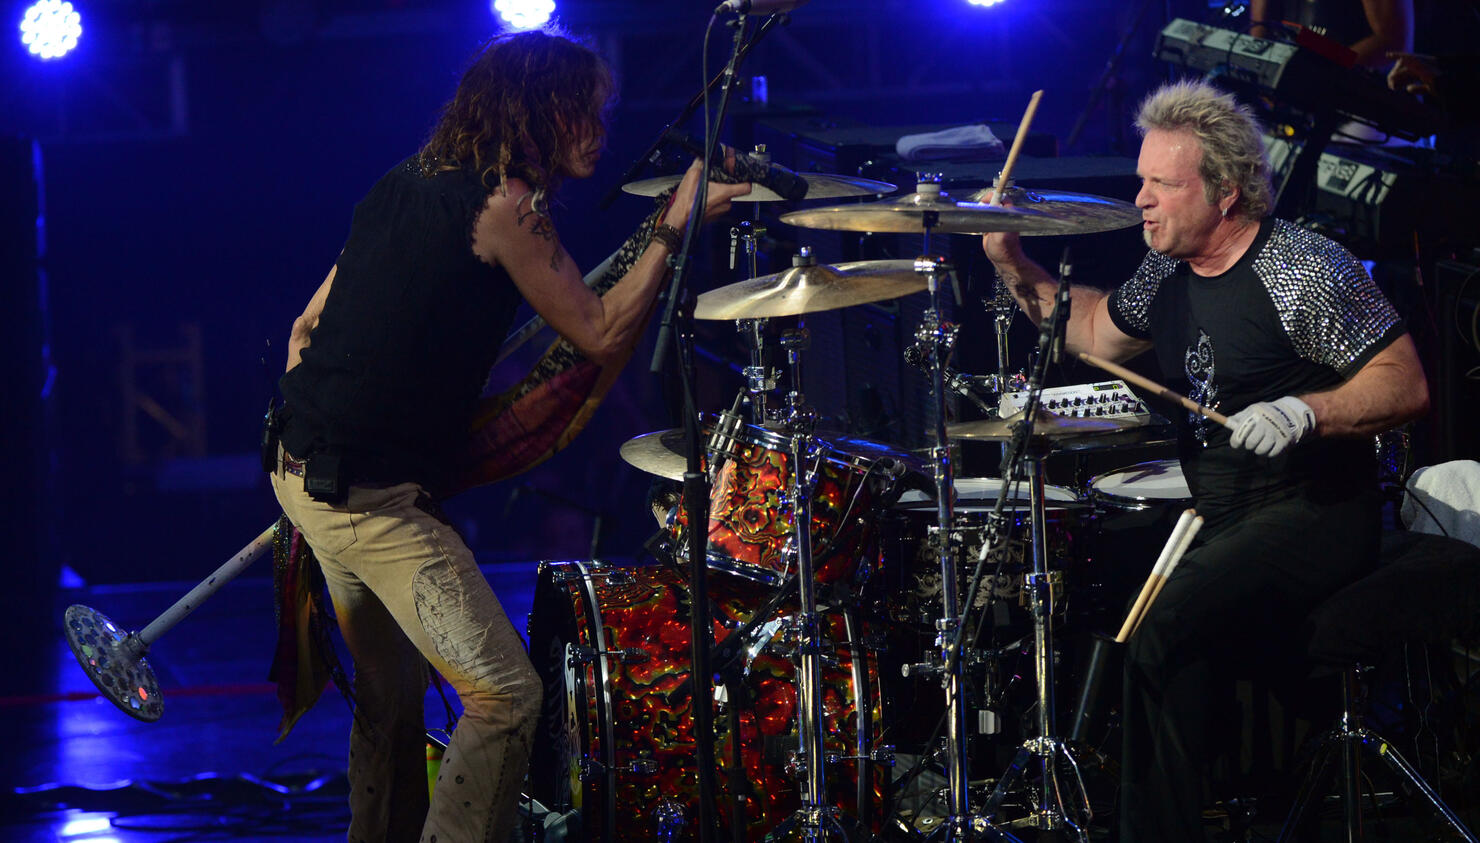 Aerosmith attributes joey kramers recent absences to minor injury